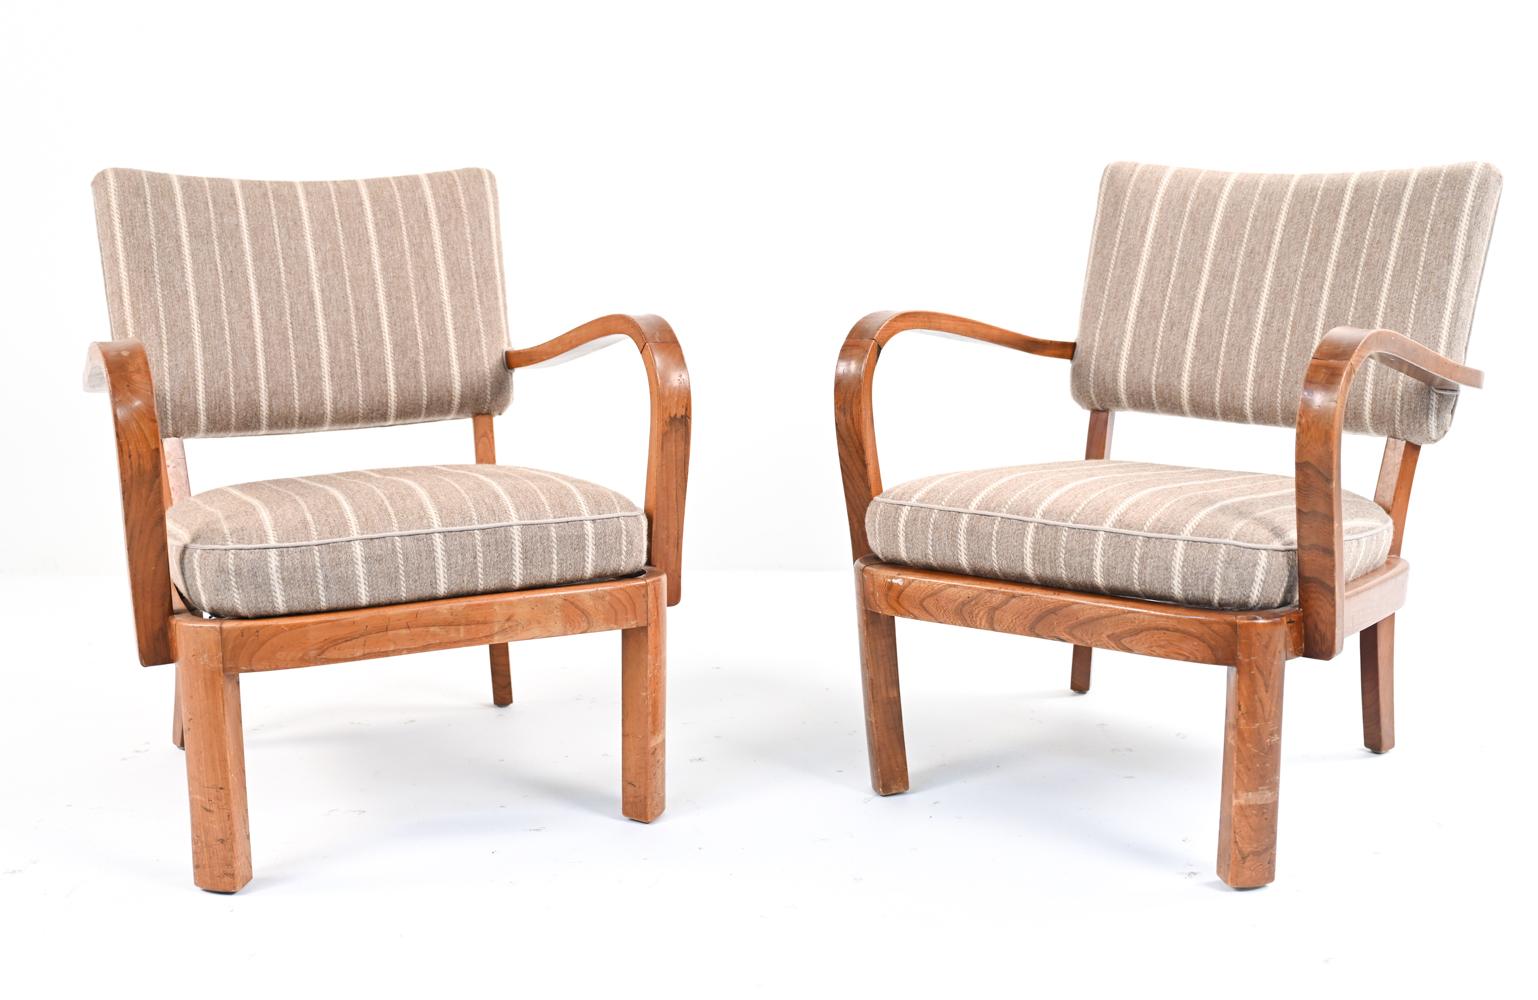 Pair of Scandinavian Elm Wood Bridge Chairs, 1940's-1950's For Sale 6